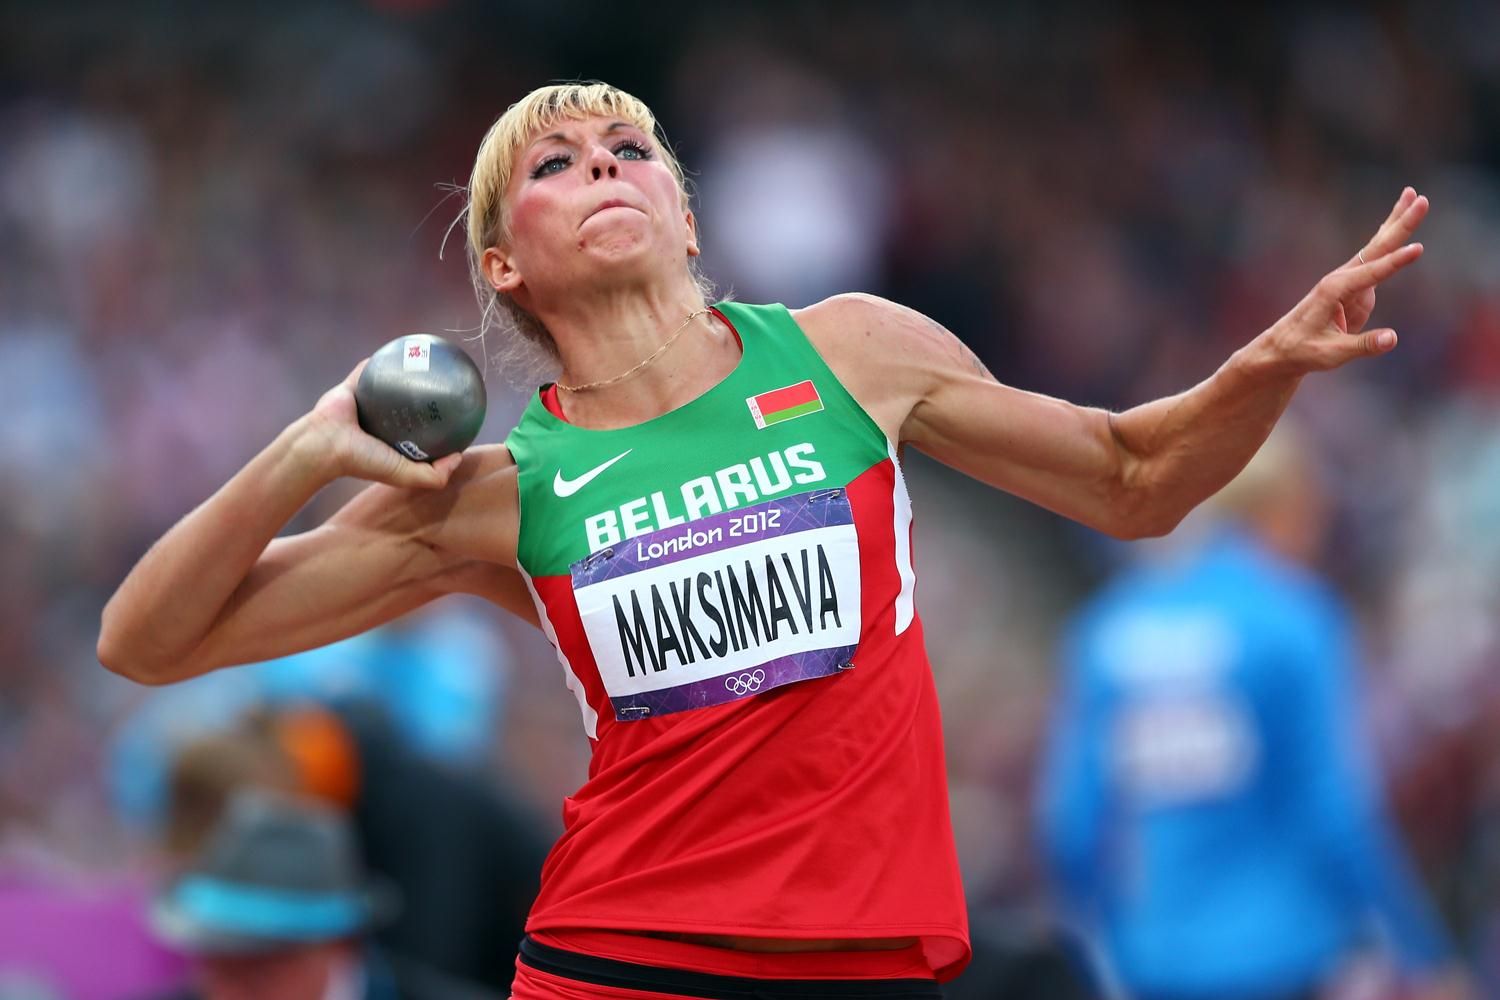 Yana MAKSIMAVA | Profile | World Athletics